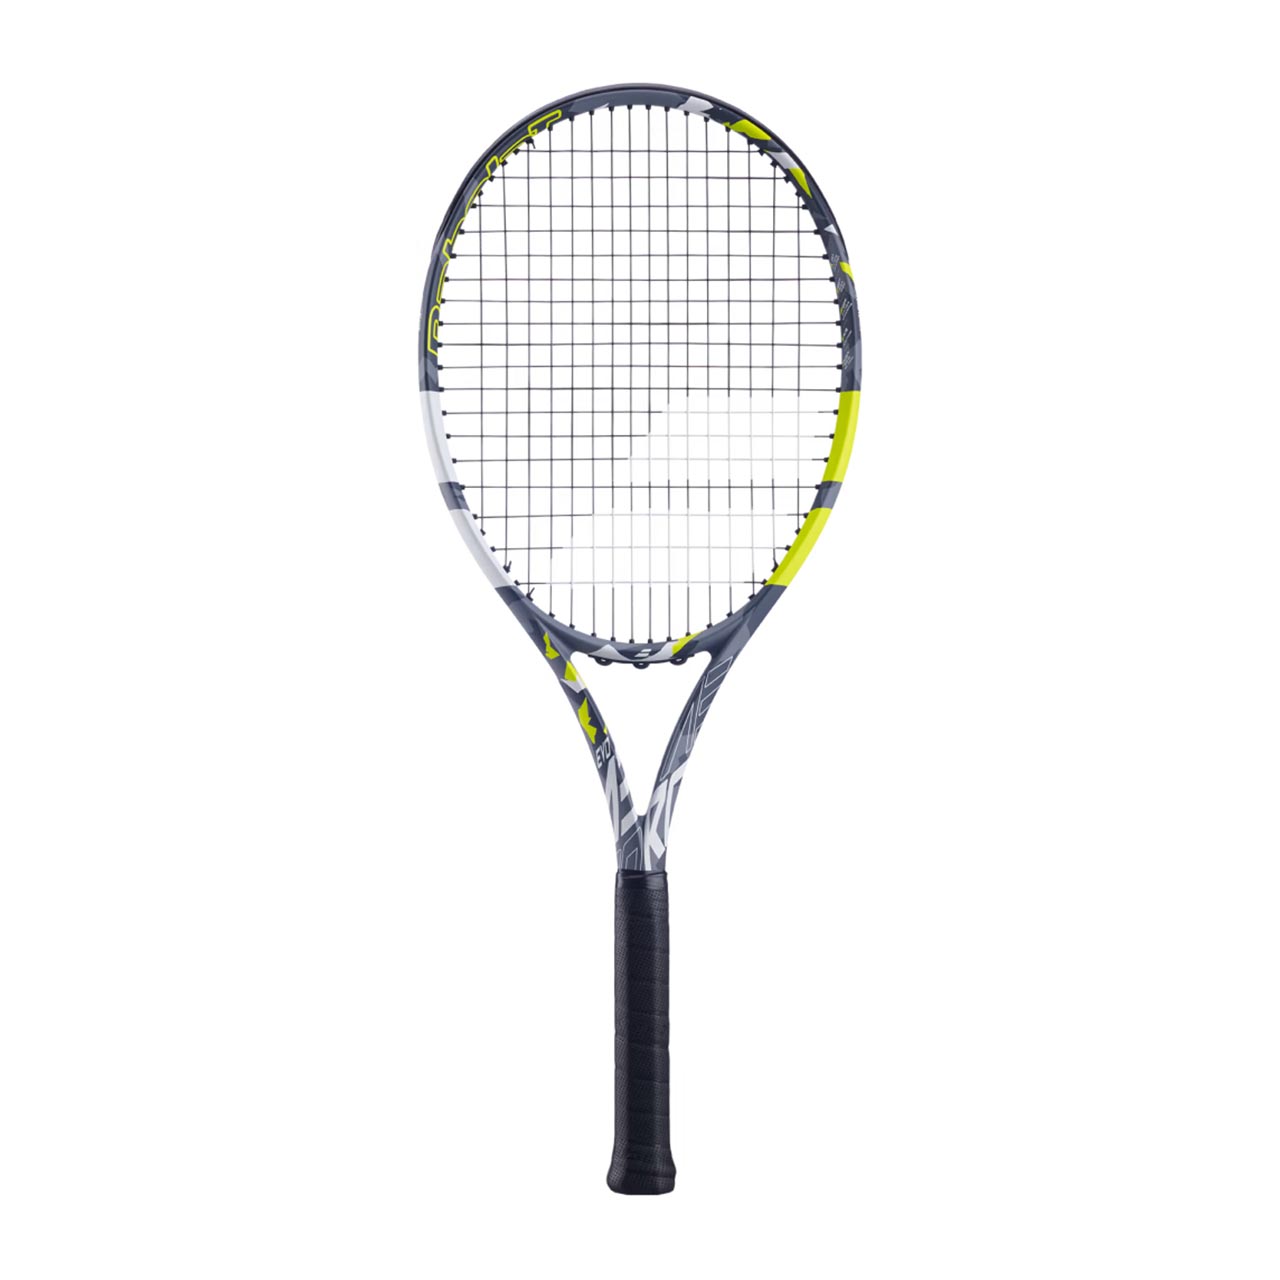 sport service italia tennis racket babolat evo aero 102505 100 - 2 | 4 ¼ - Sport Service Italia